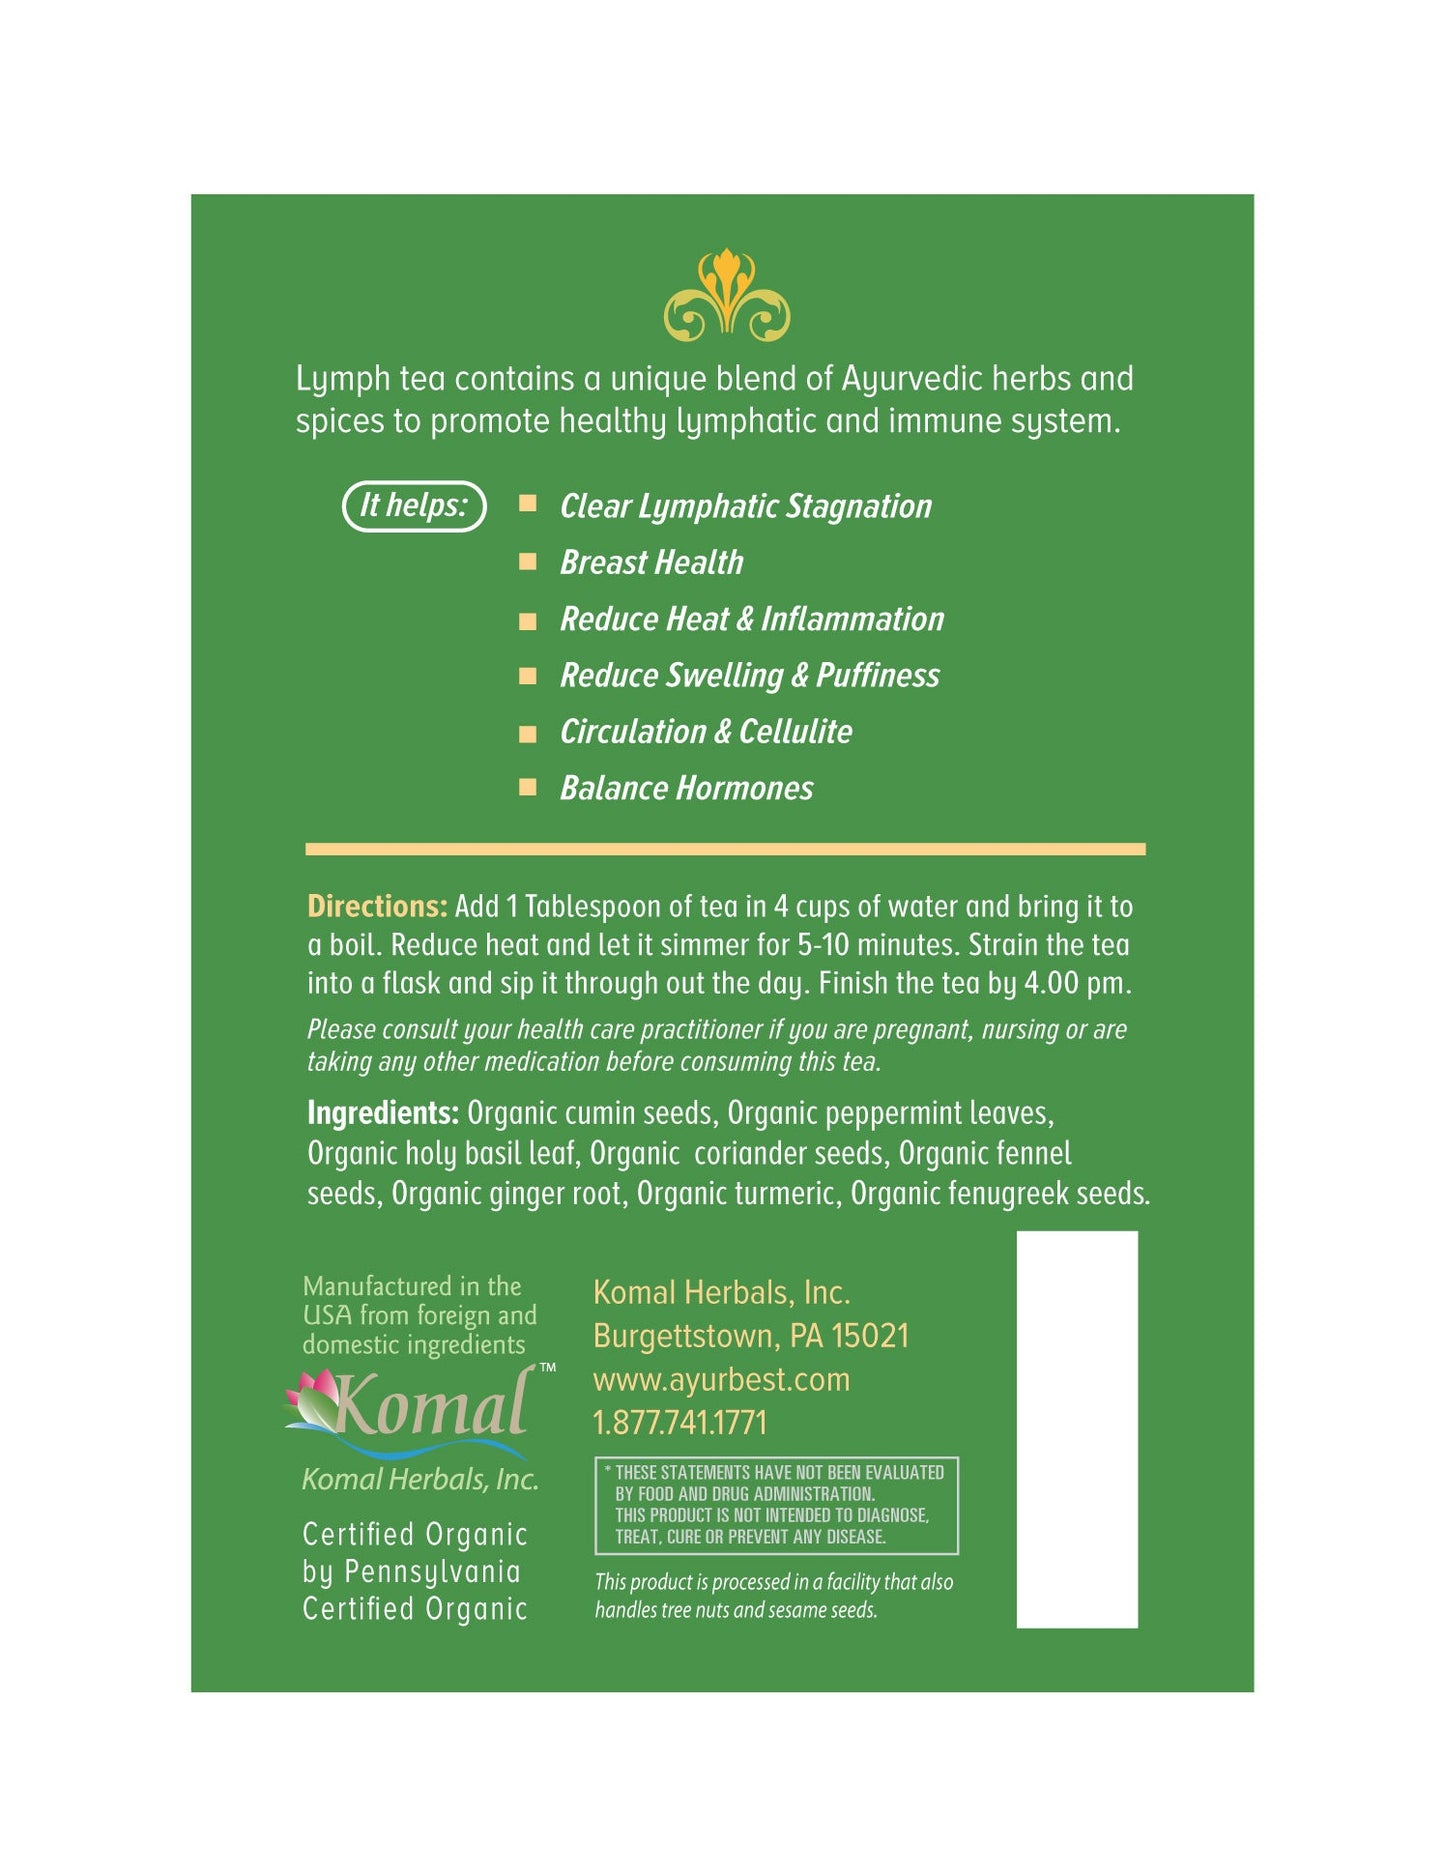 Wholesale Herbal Teas - Lymph Herbal Tea, Organic Organic 8oz (227g)